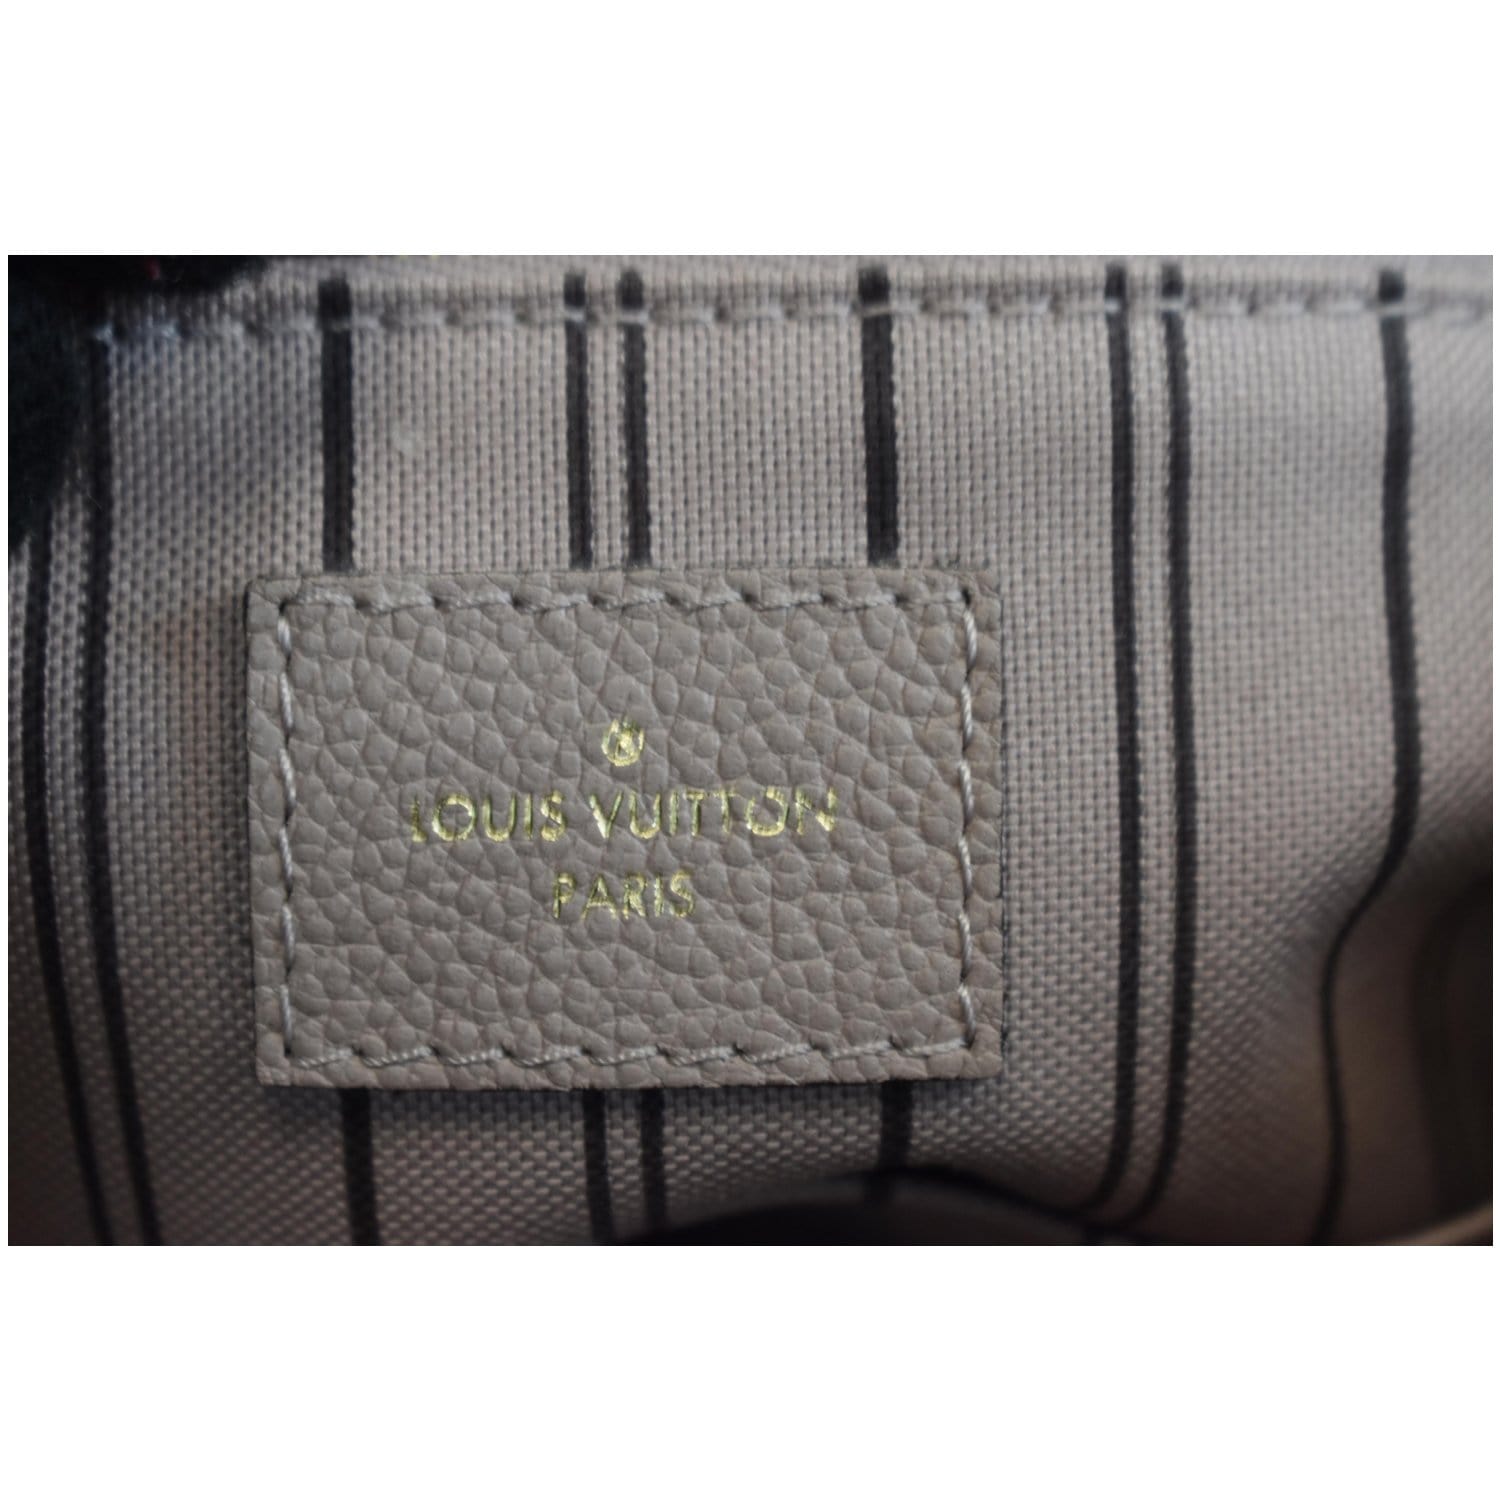 Buy Online Louis Vuitton-EMPREINTE SPONTINI-M42819 at affordable